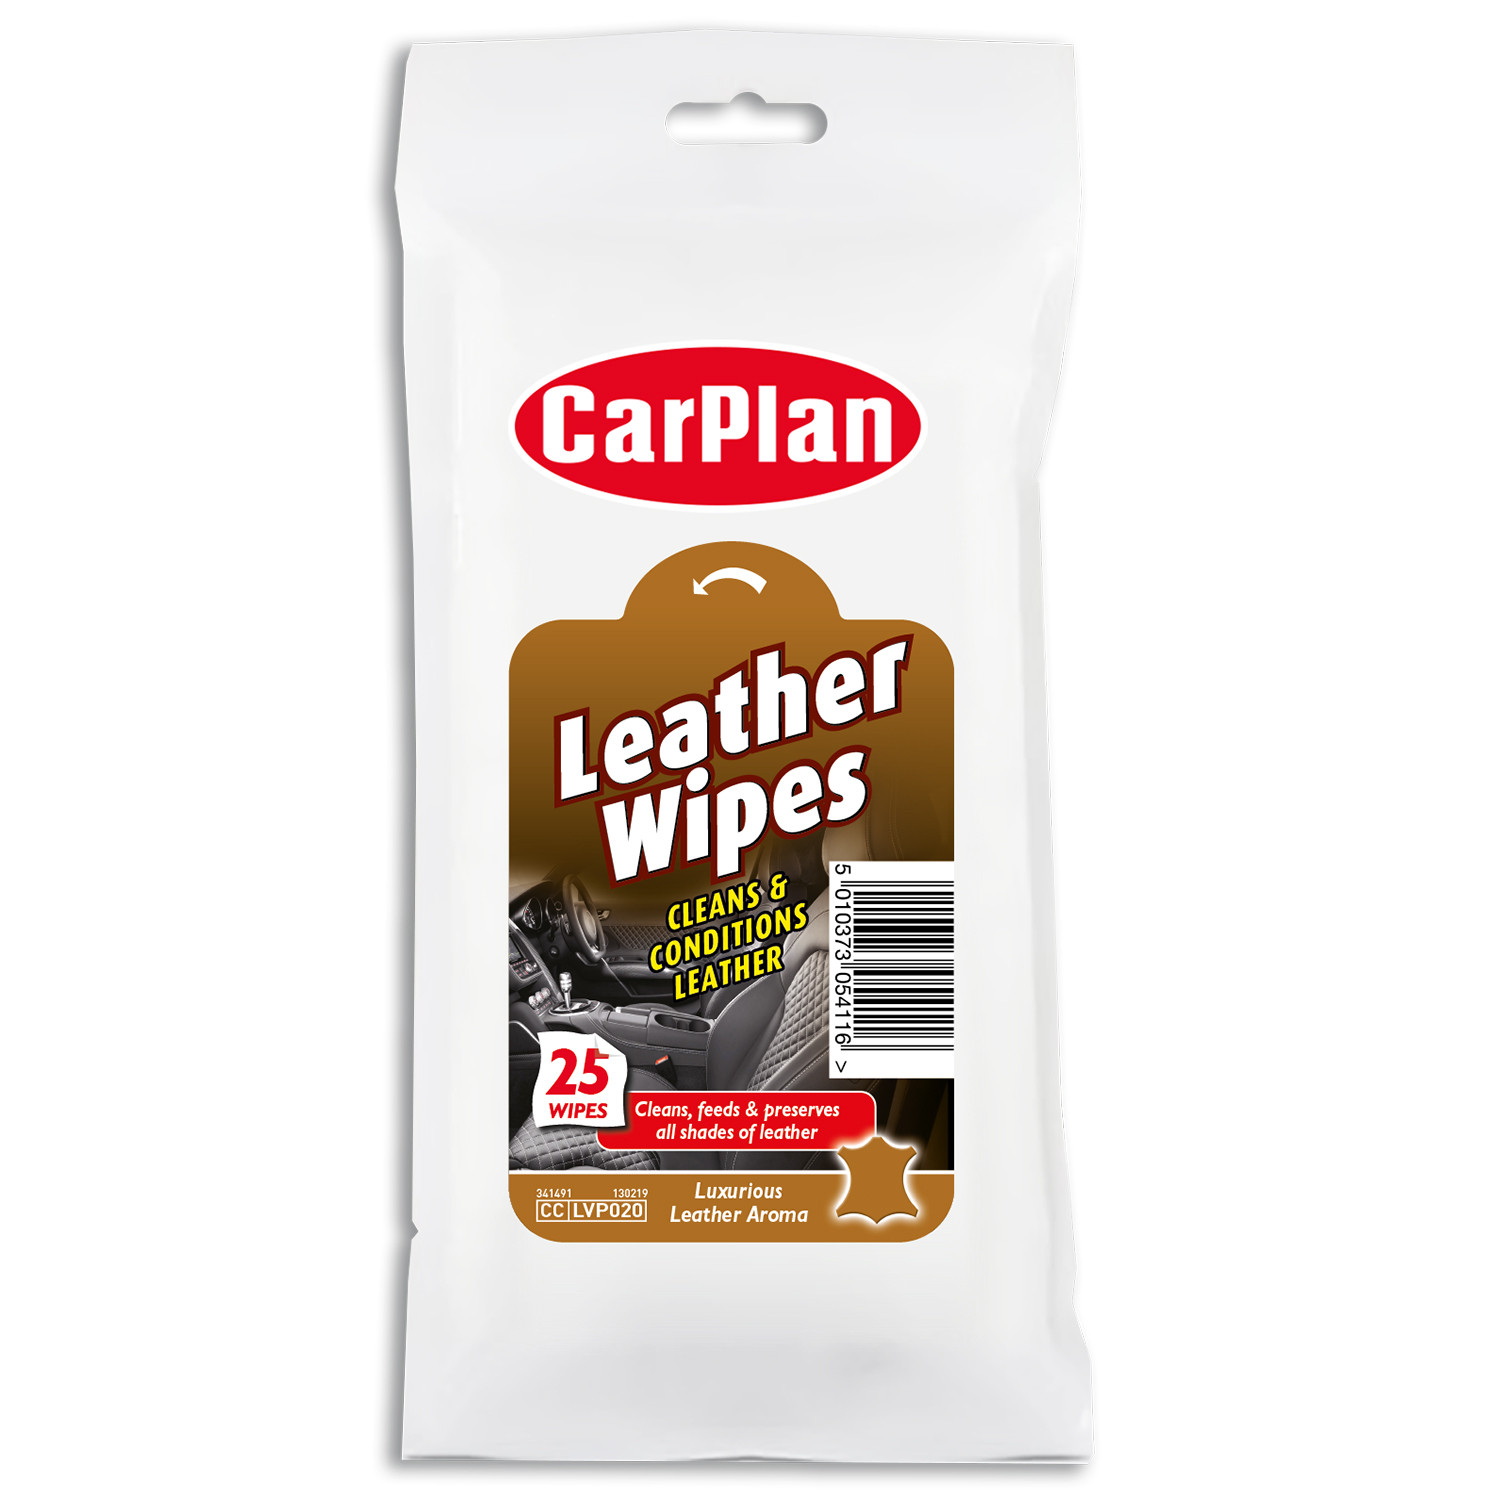 CarPlan Leather Wipes 25 Pack Image